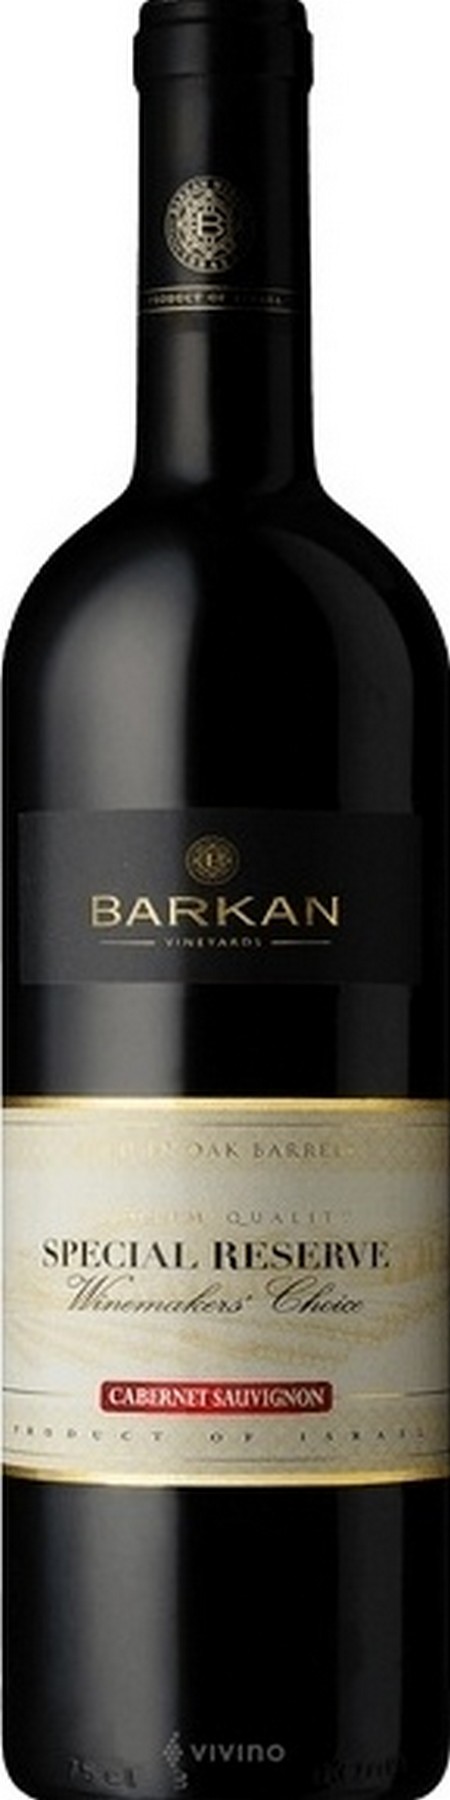 barkan-special-reserve-cabernet-sauvignon-2018